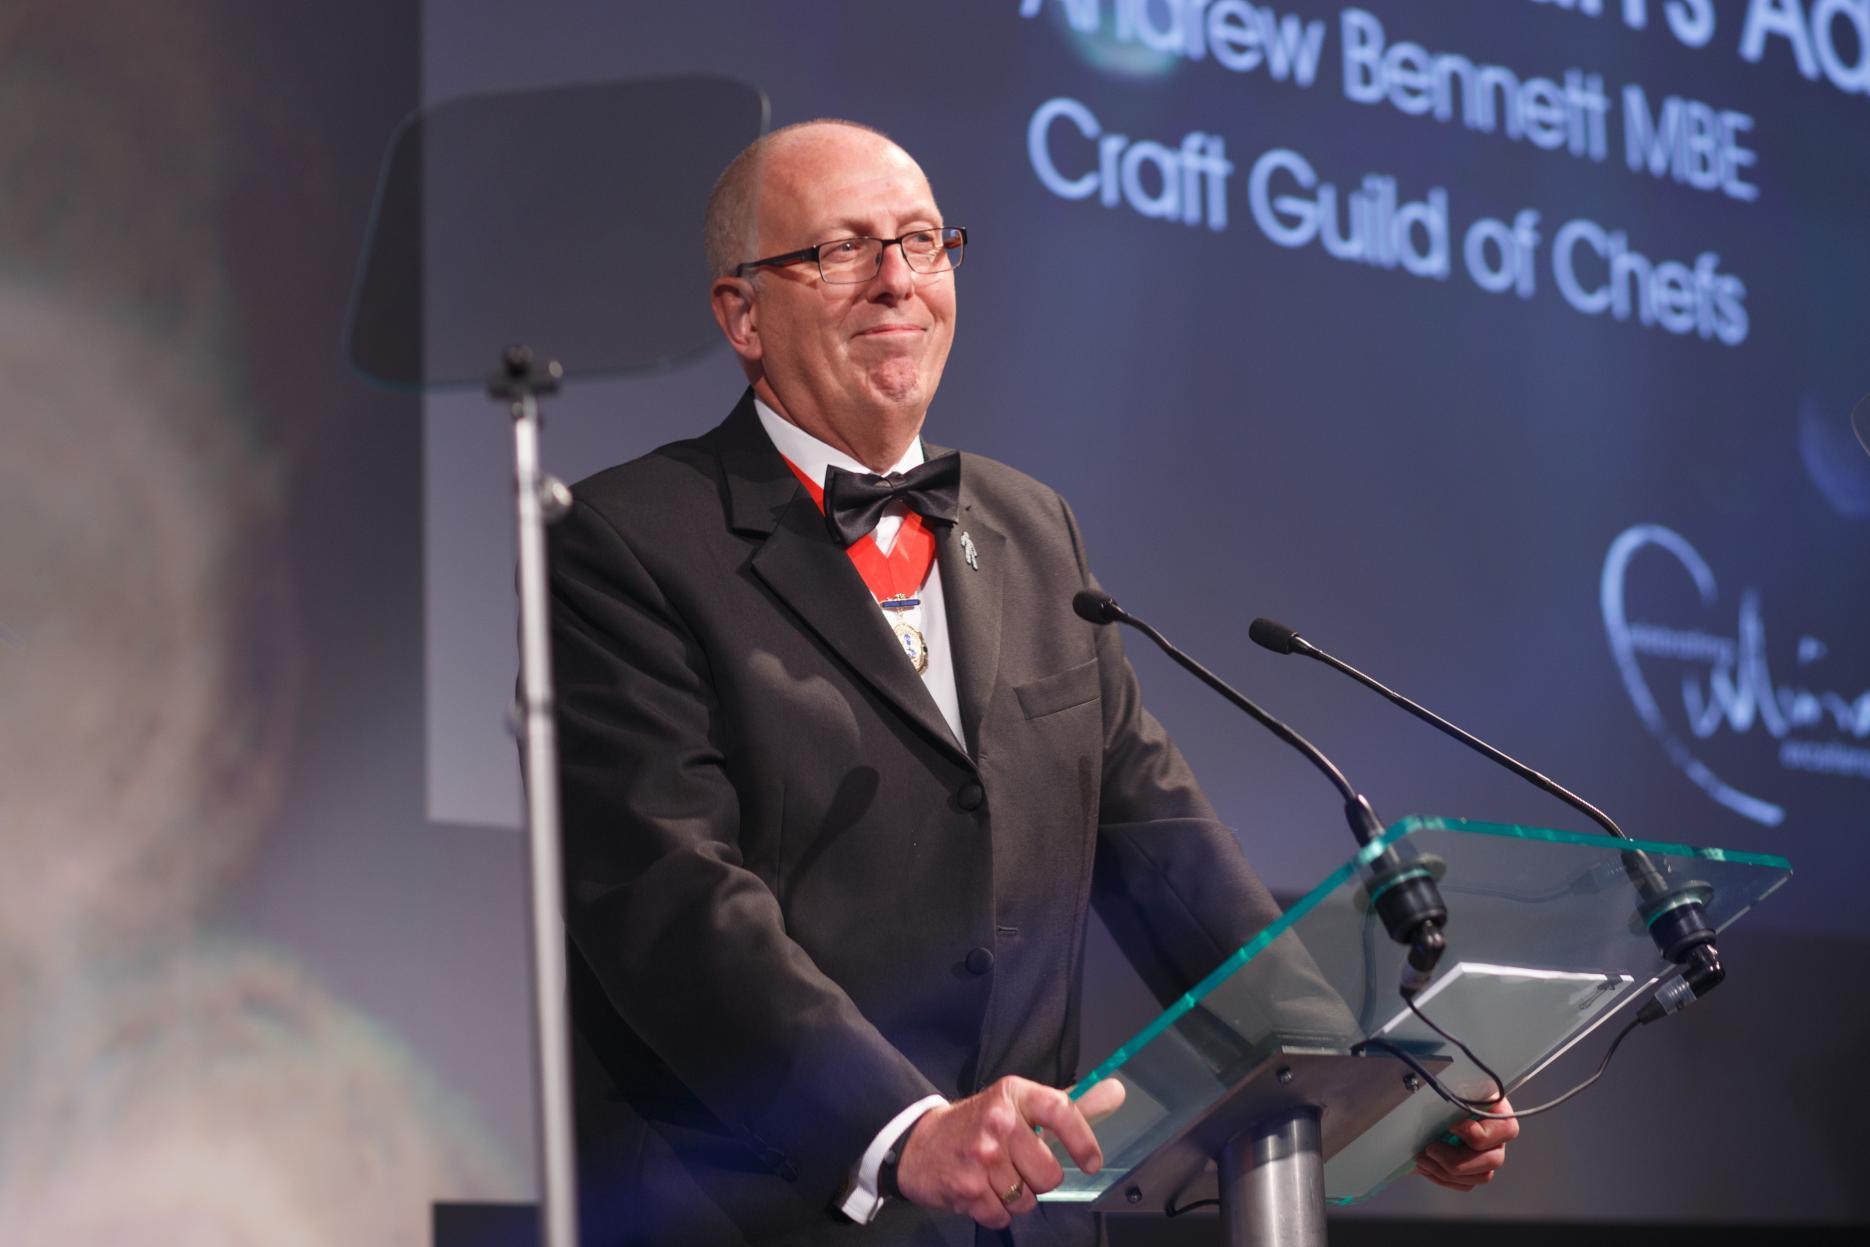 Andrew Bennett MBE, Craft Guild of Chefs chairman 